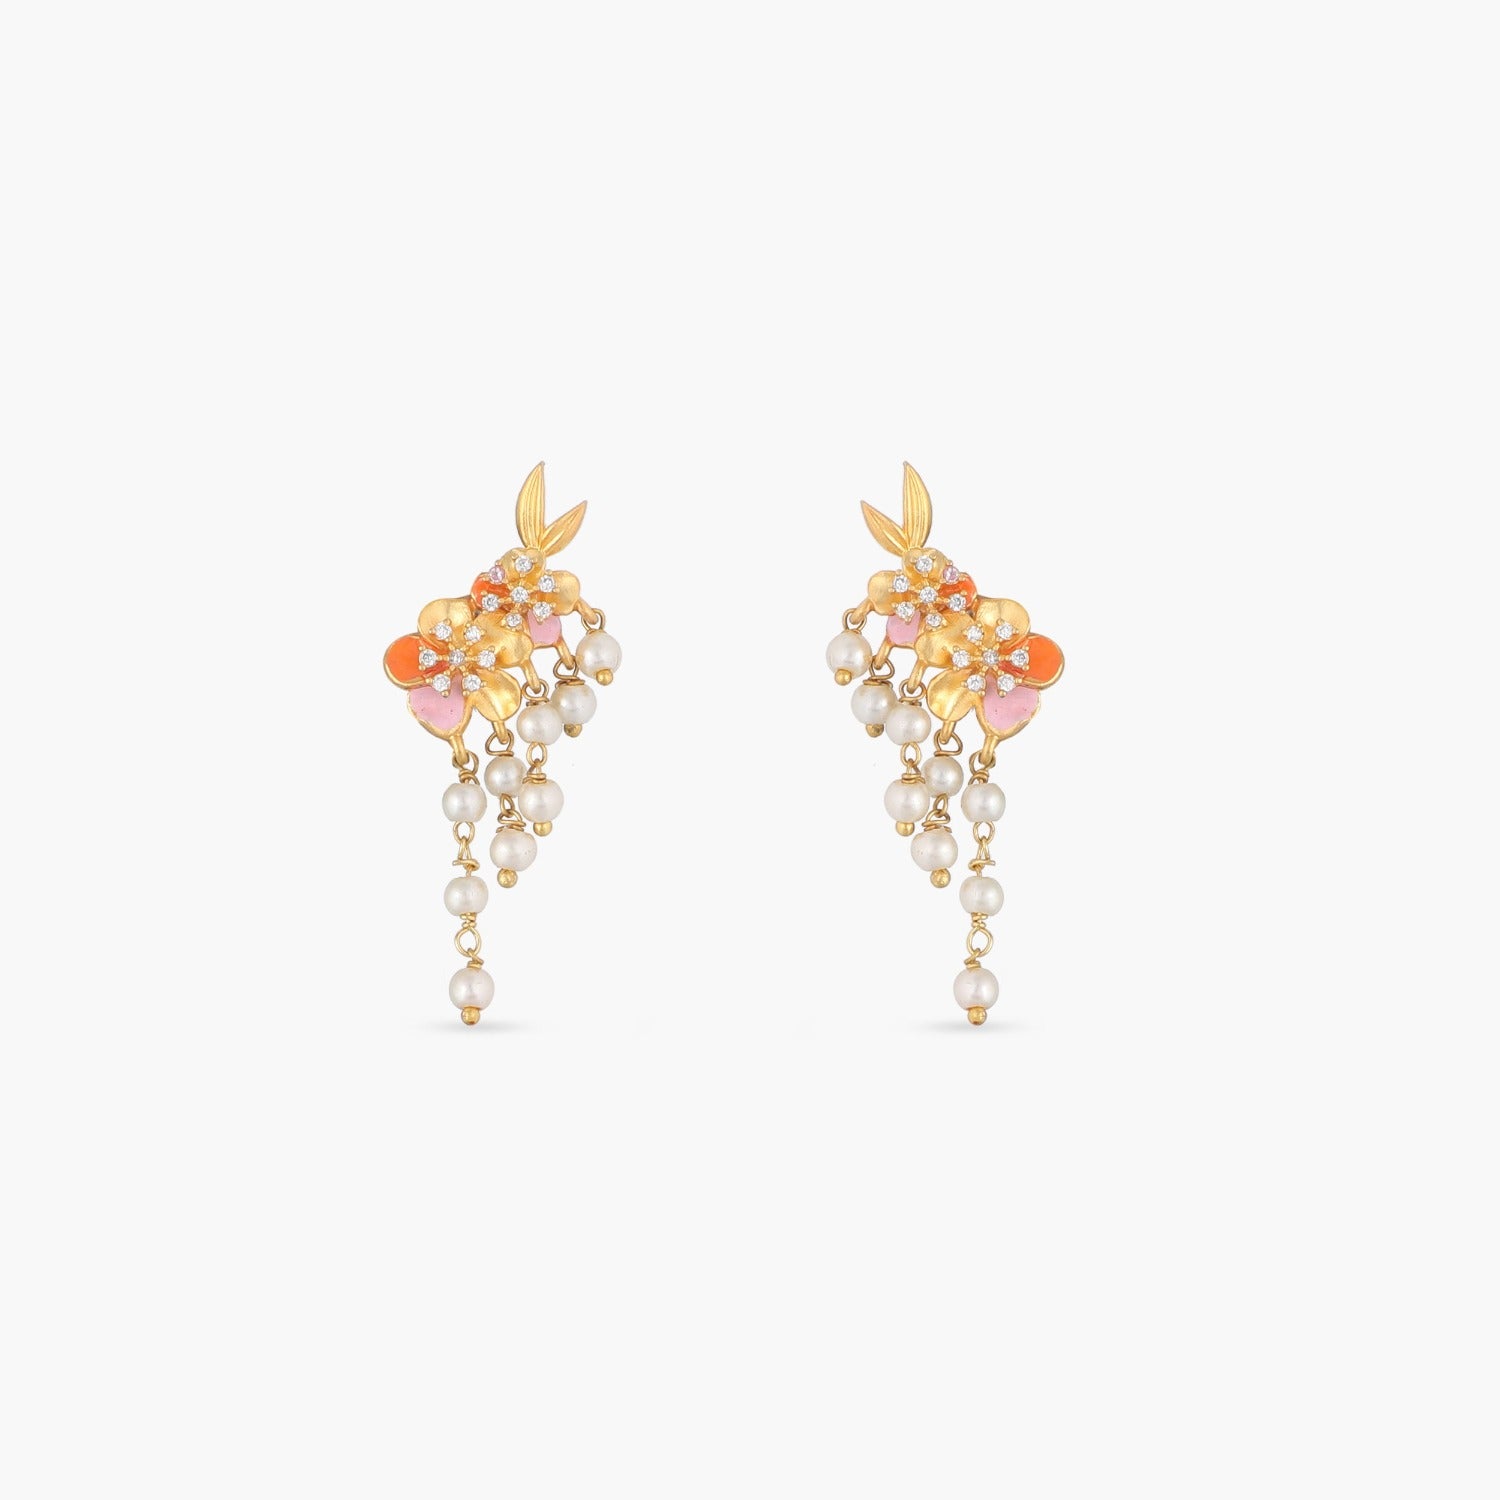 Buy Simple Elegant Diamond Dangle Drop Earrings 925 55 OFF